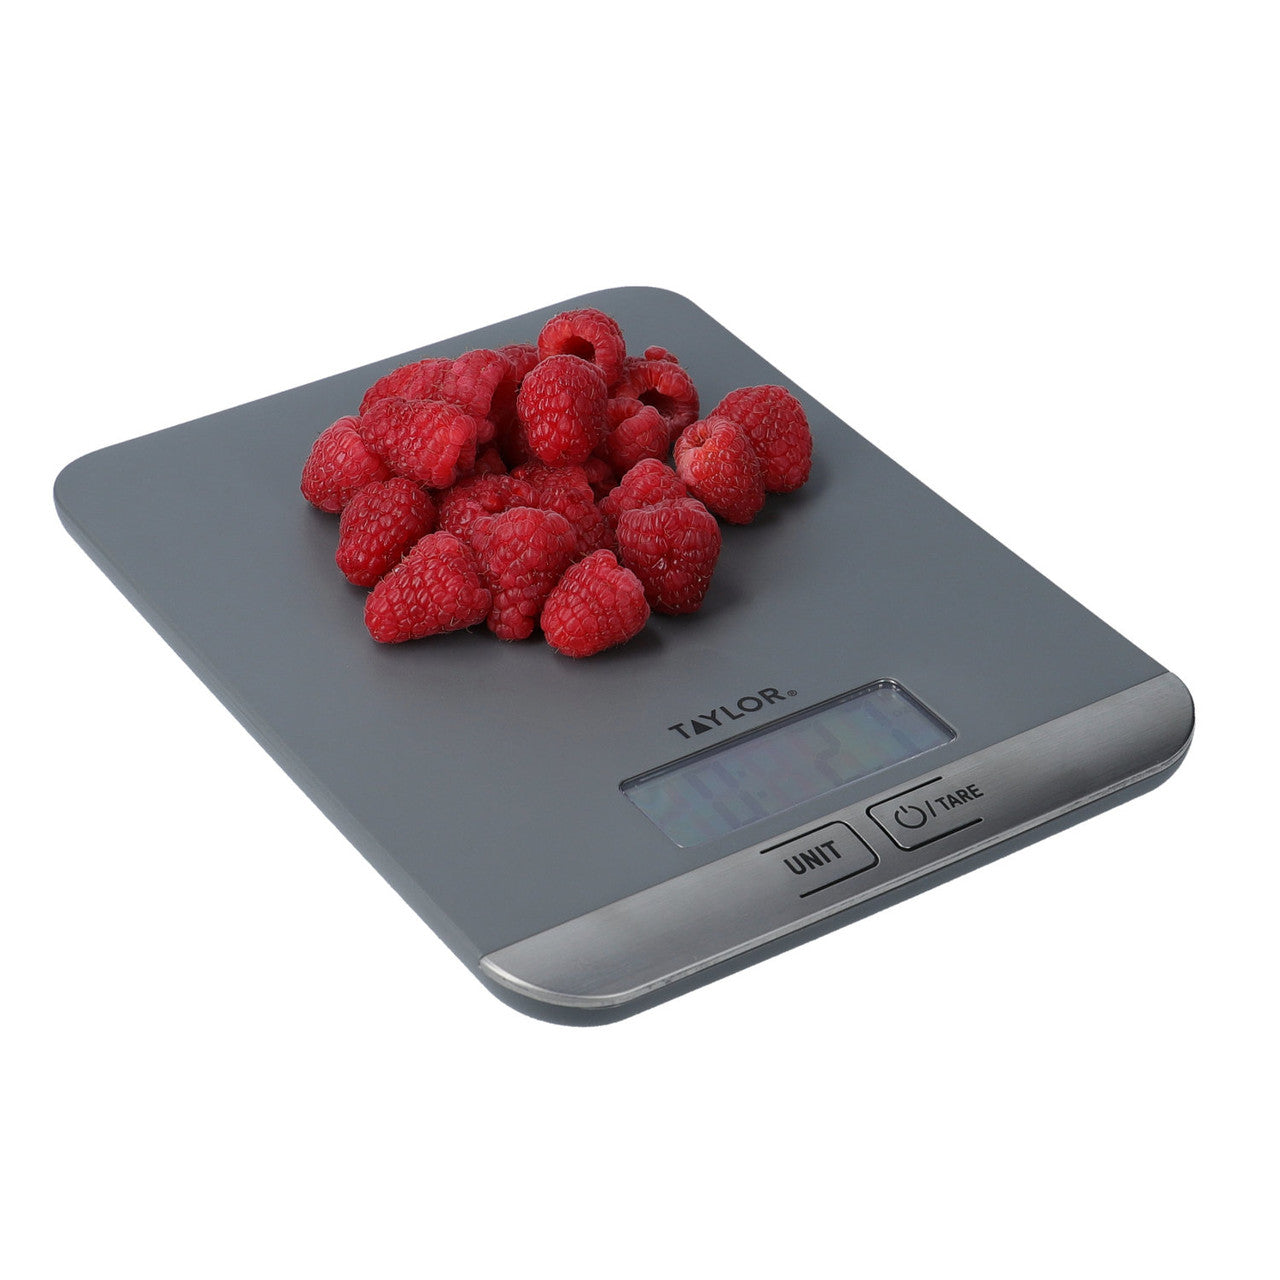 Taylor Digital Slim Kitchen Weighing Scales Grey 5KG Capacity